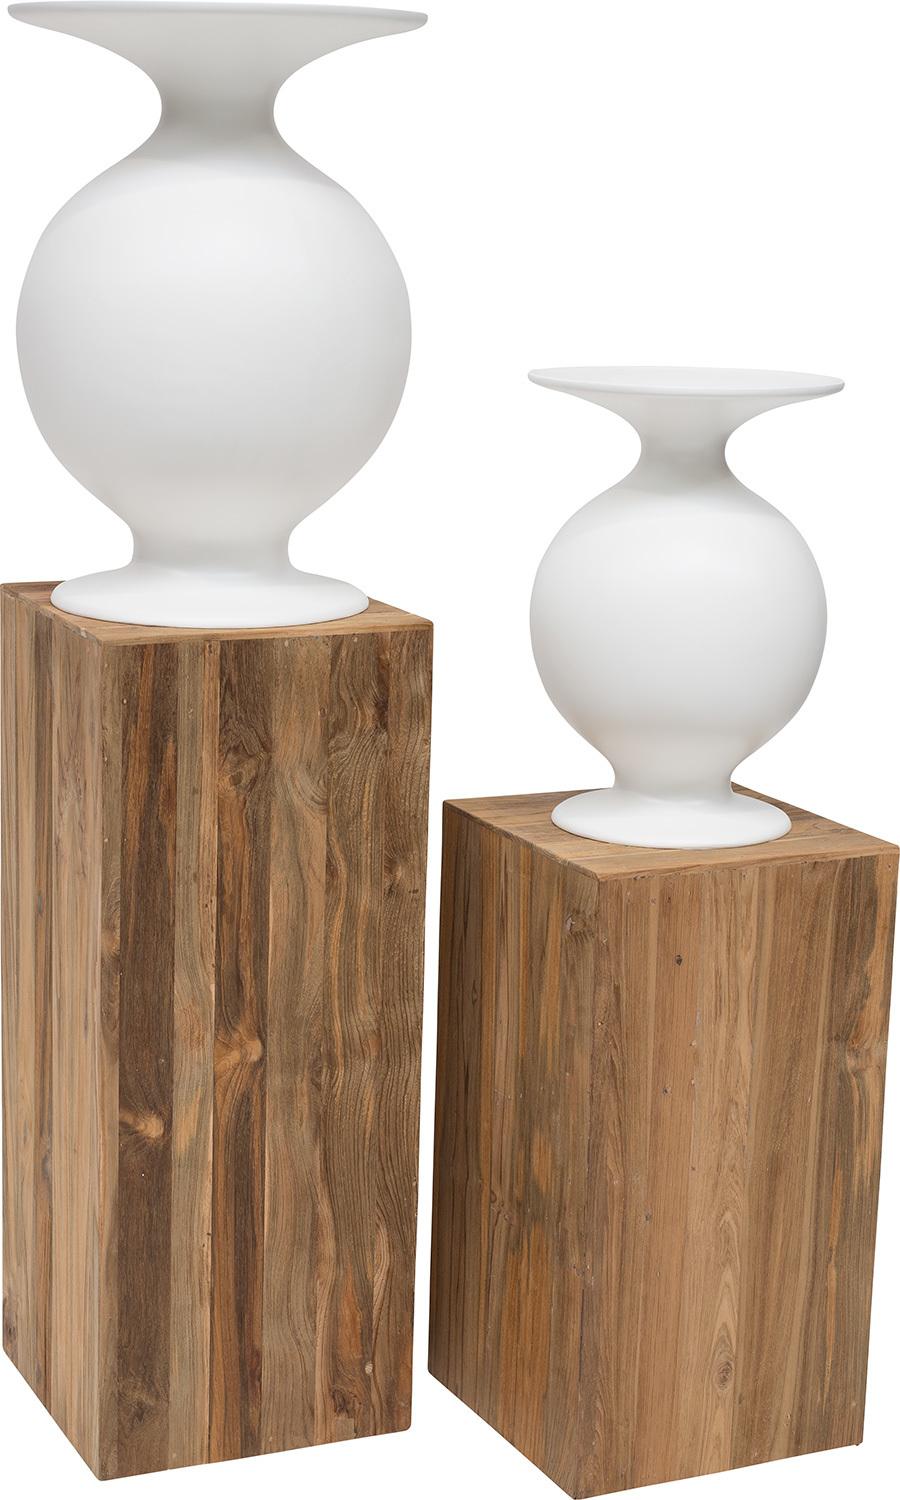 TEAK pedestal, 40x40/100 cm, recycled teak